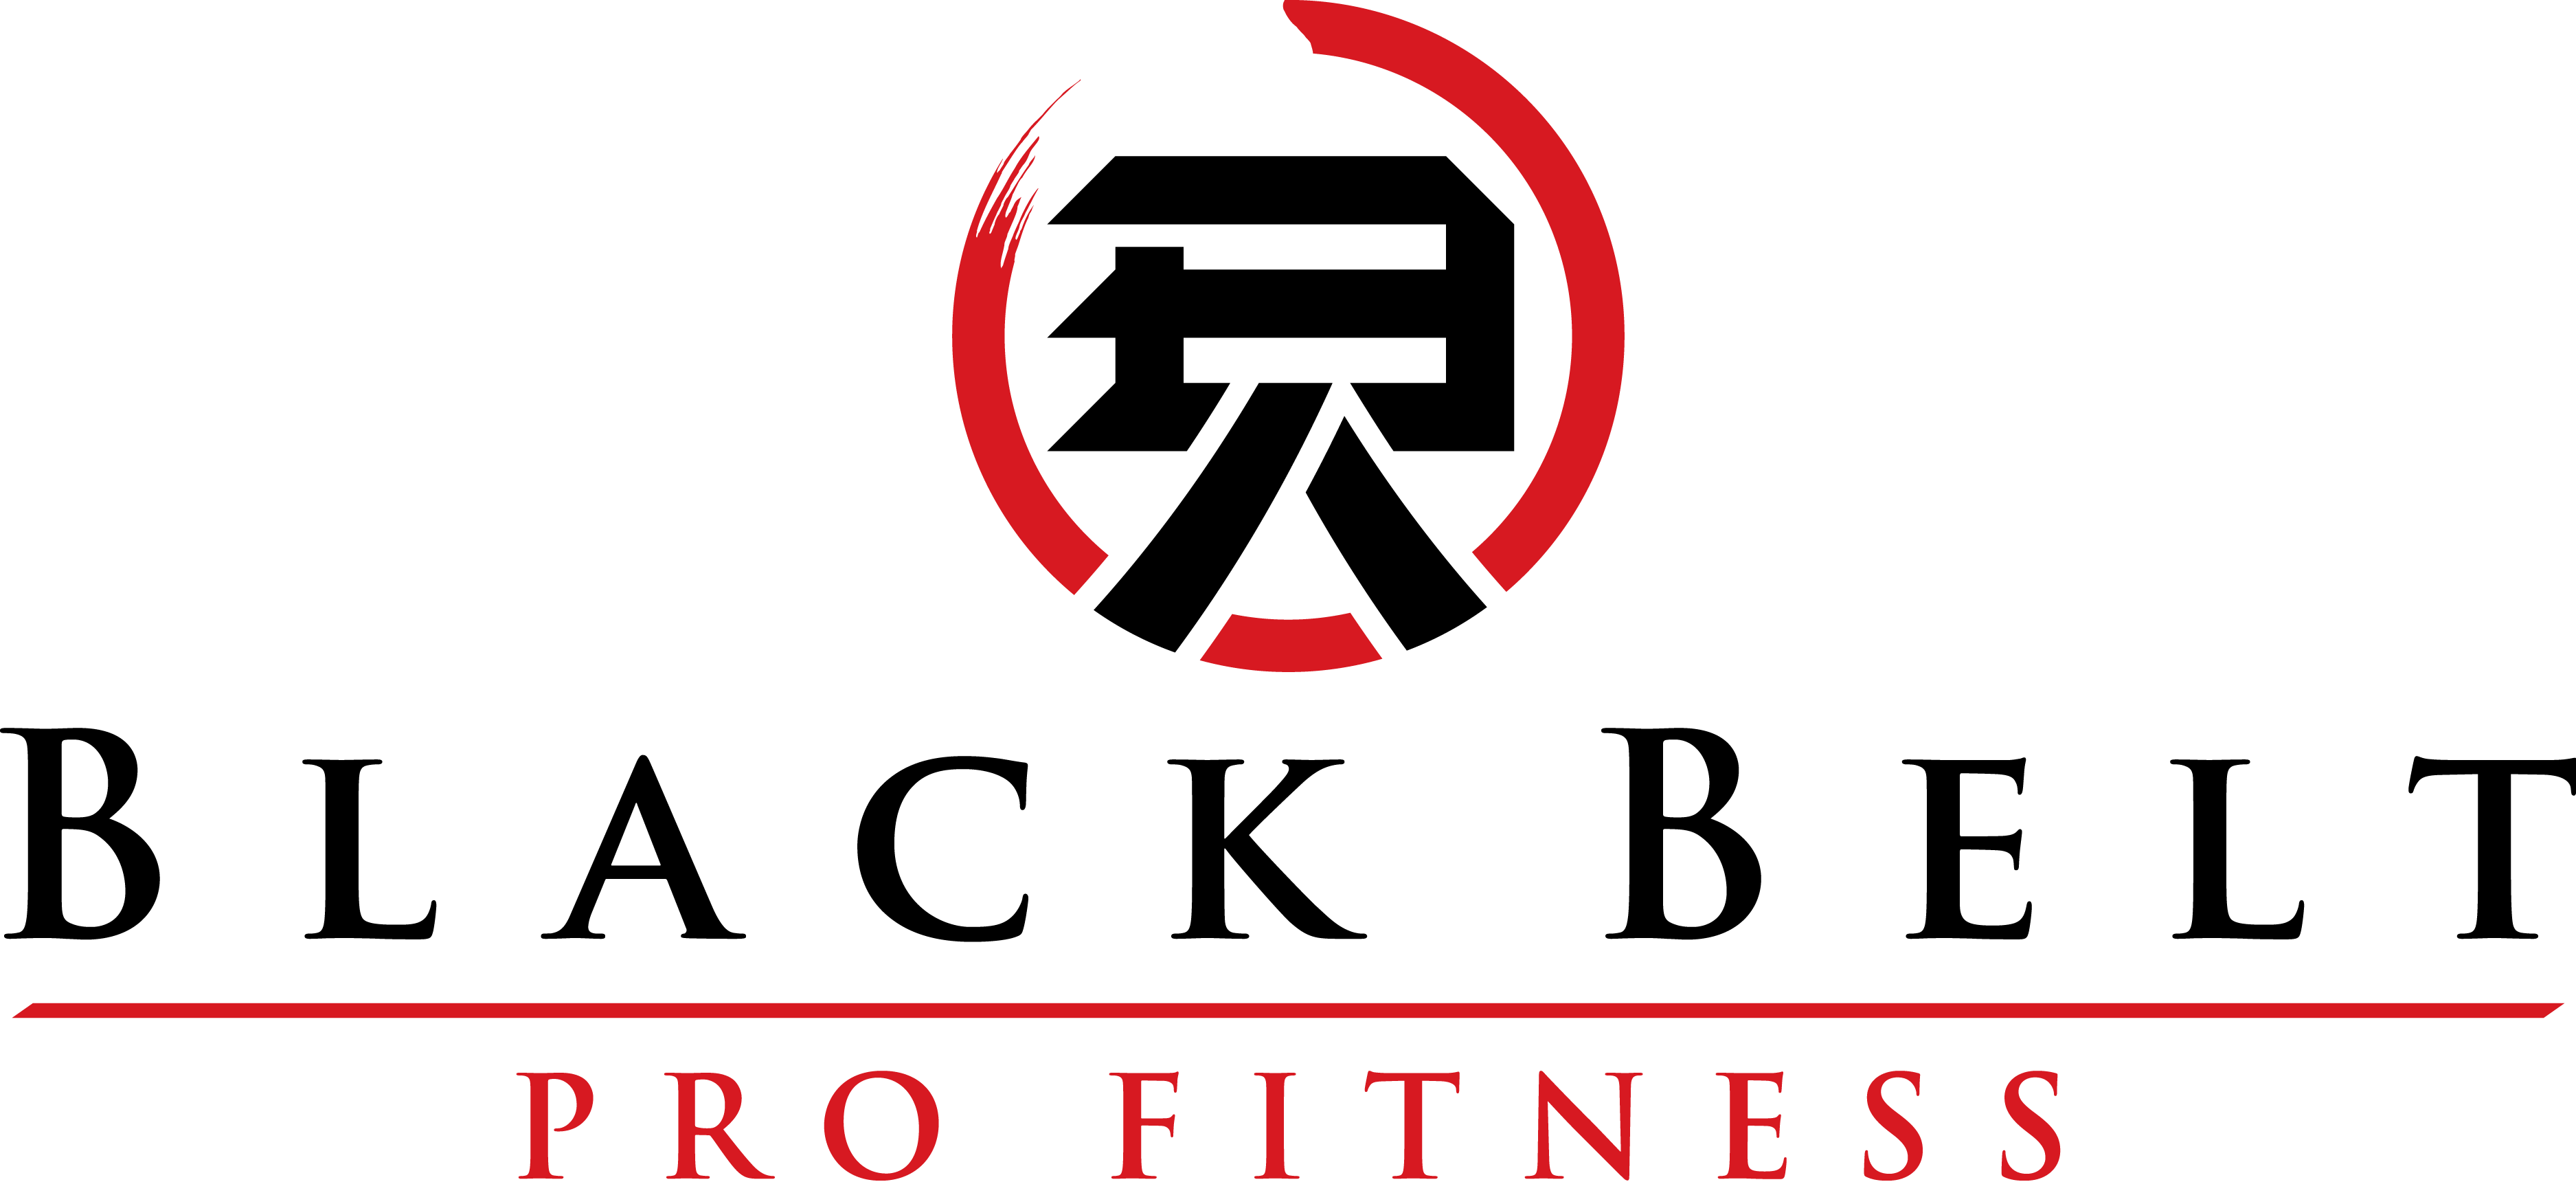 Black Belt Pro Fitness - Mansfield logo